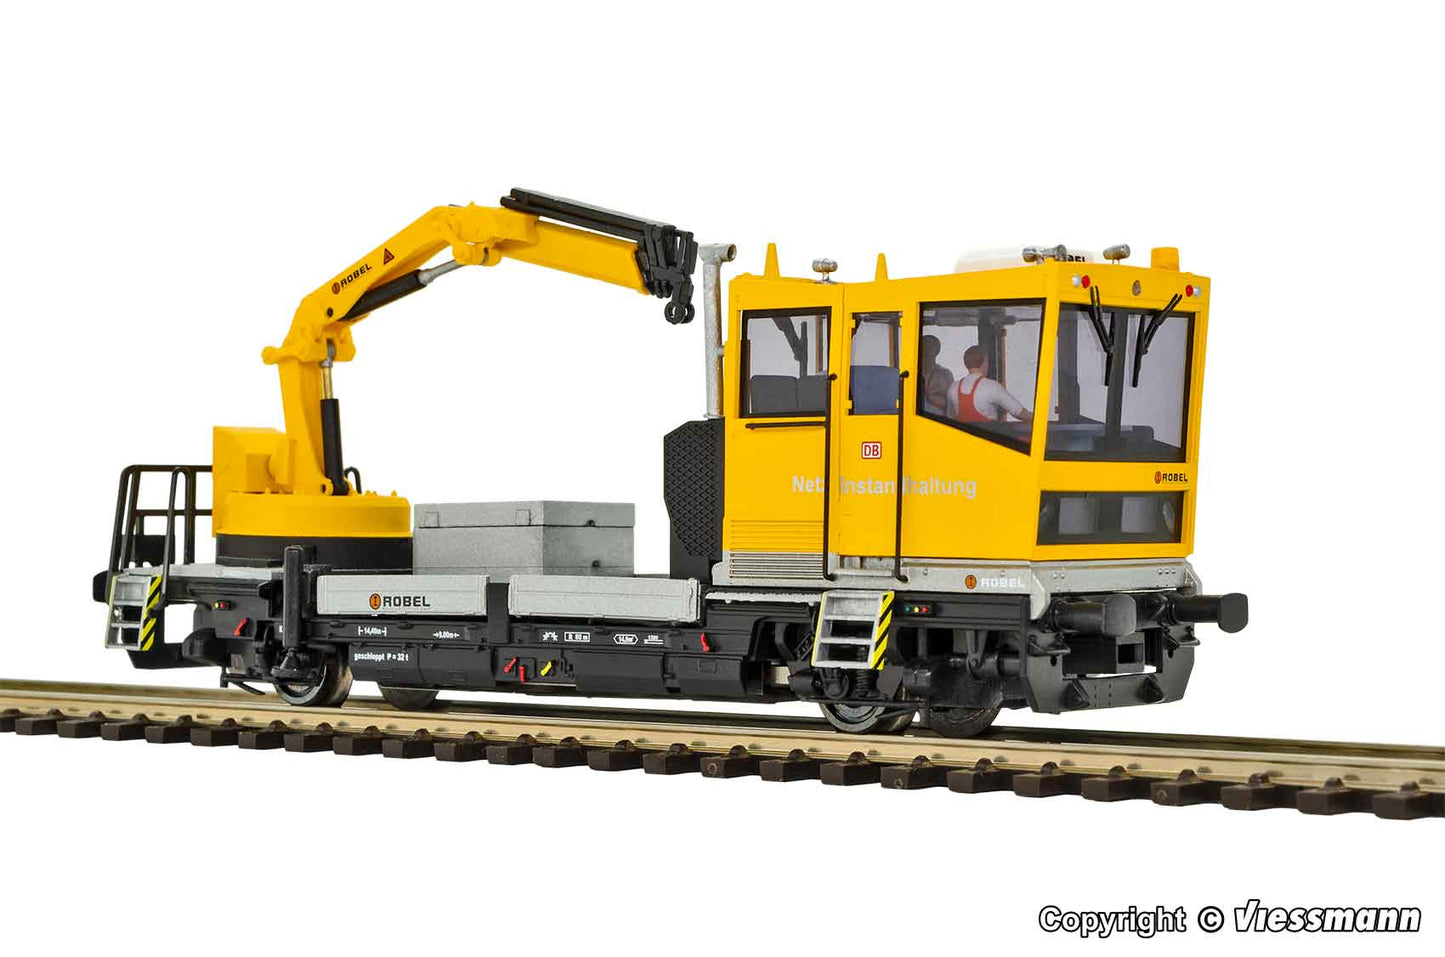 Viessmann 2620: H0 ROBEL track motor car 54.22 DB Netz with motorized crane, functional model, 2 rail version